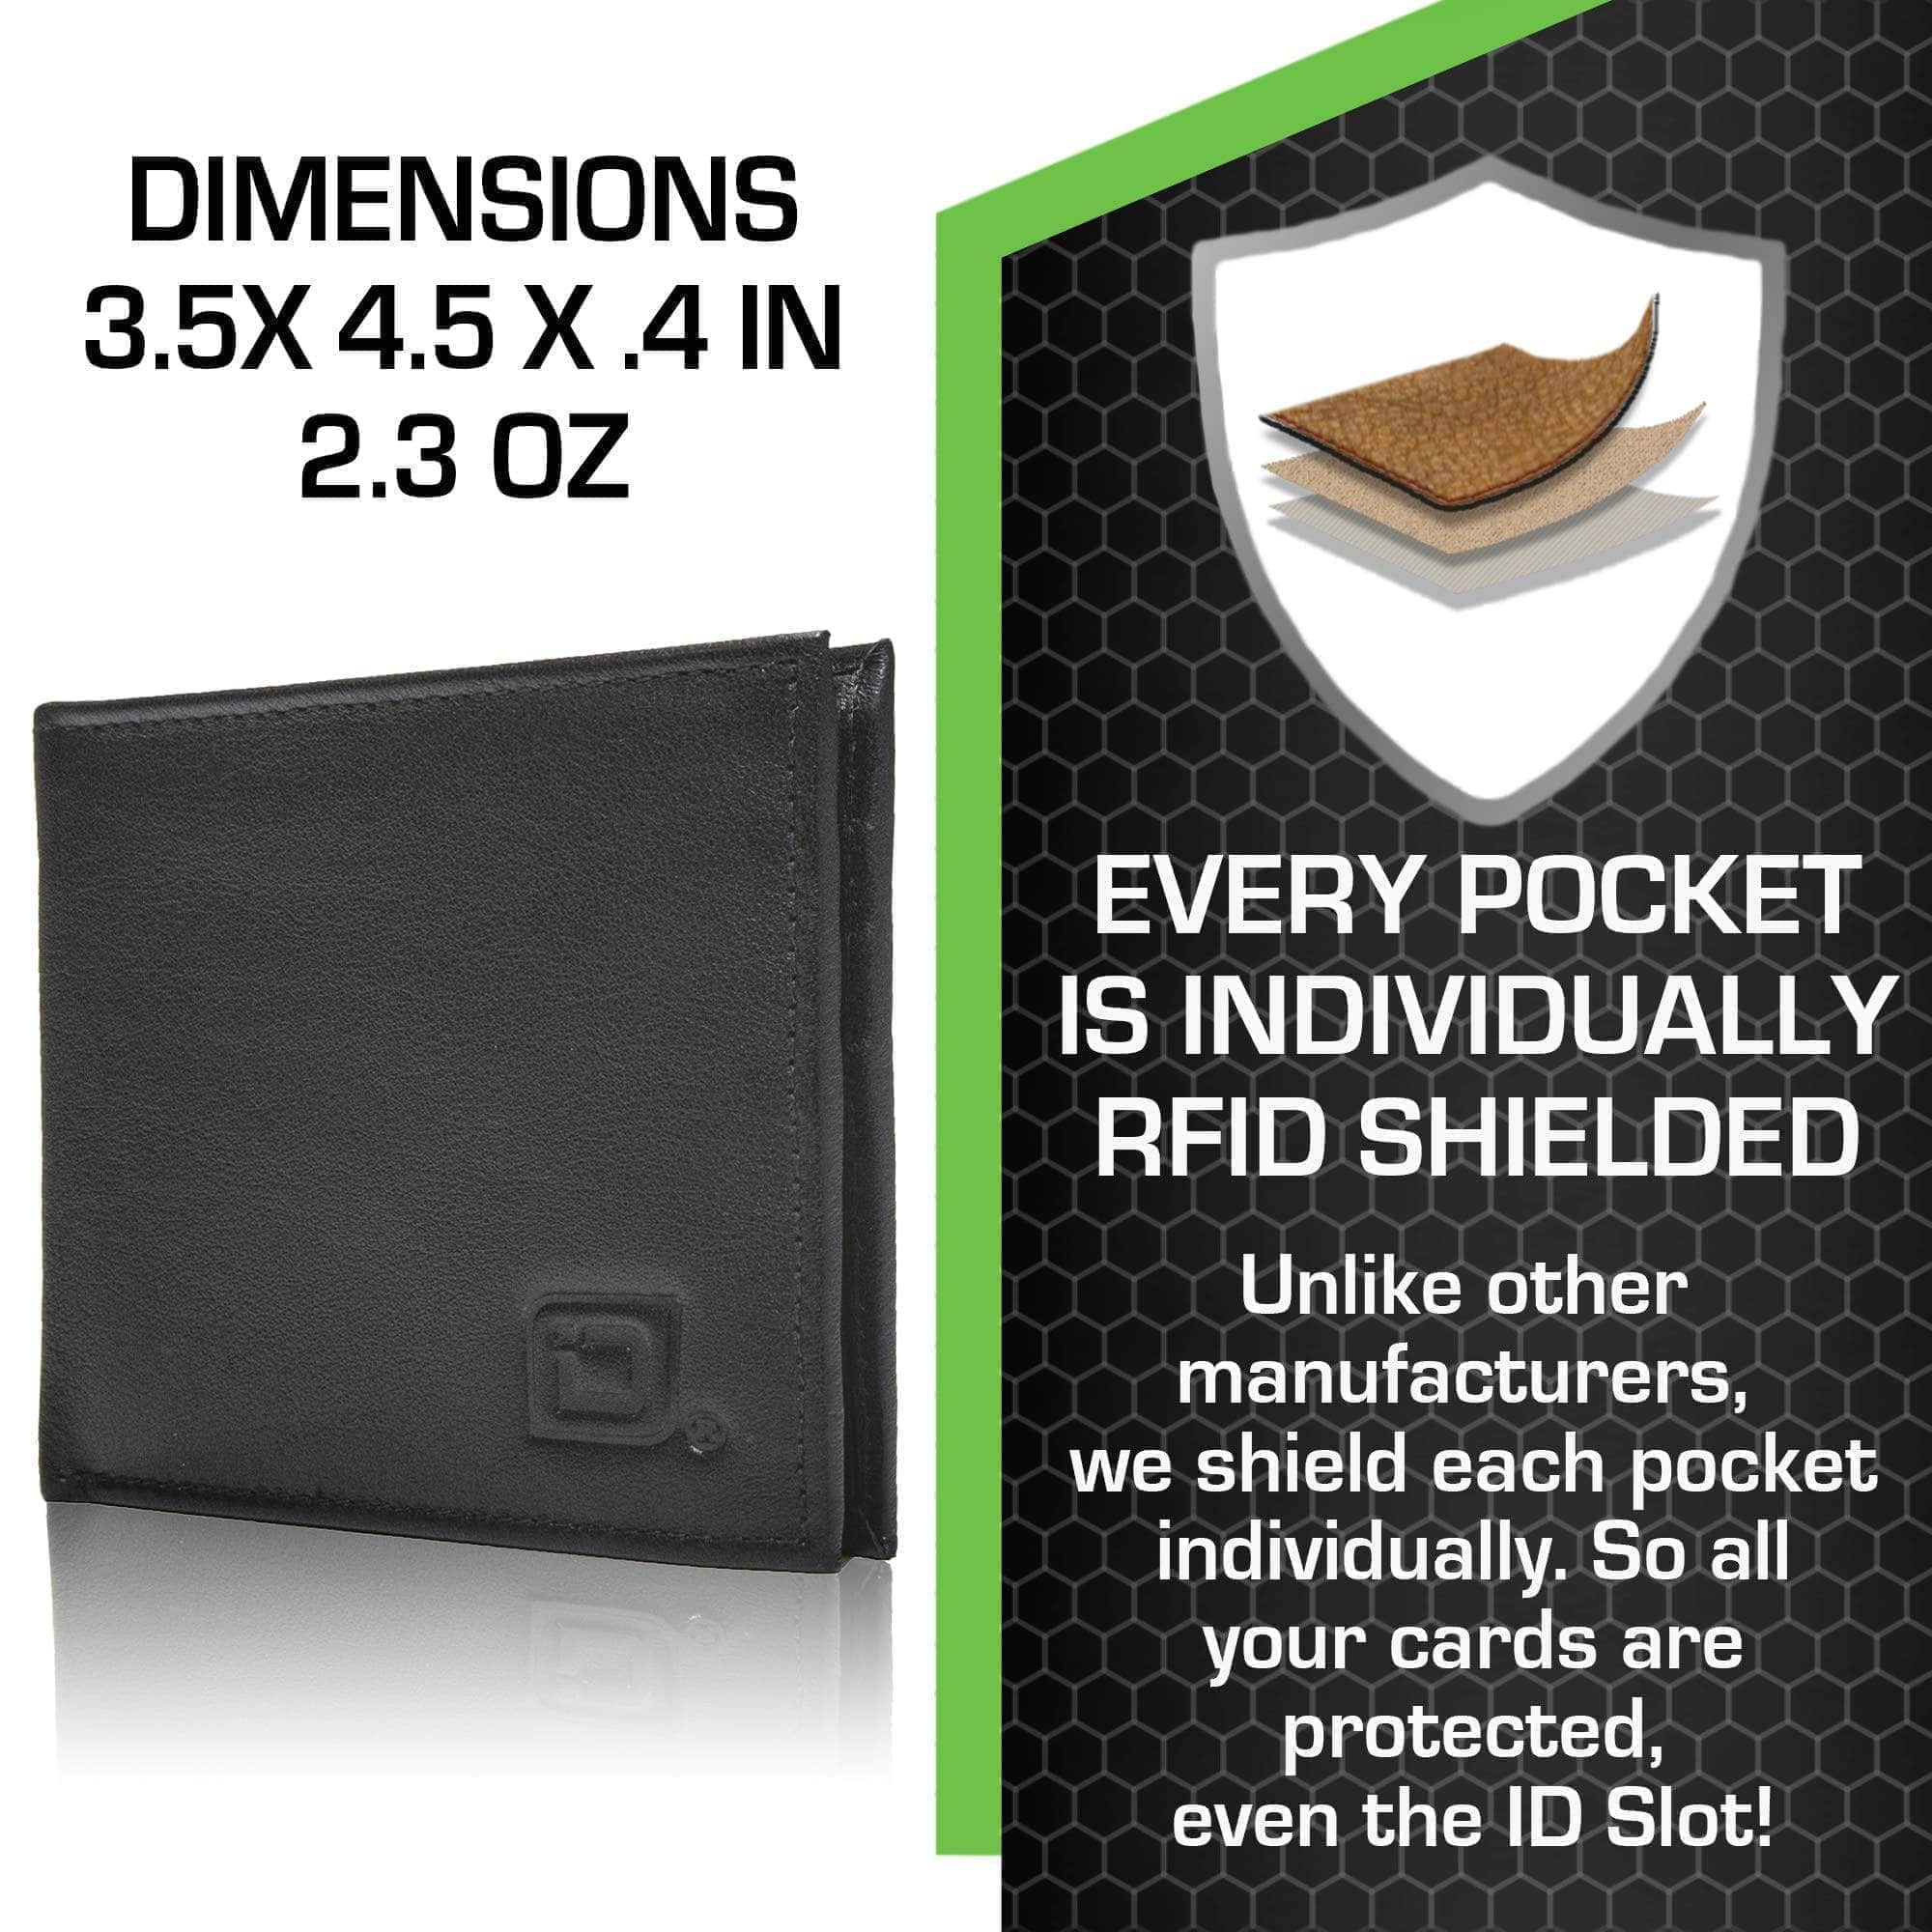 ID Stronghold  Men's RFID Bifold 6 Slot Wallet